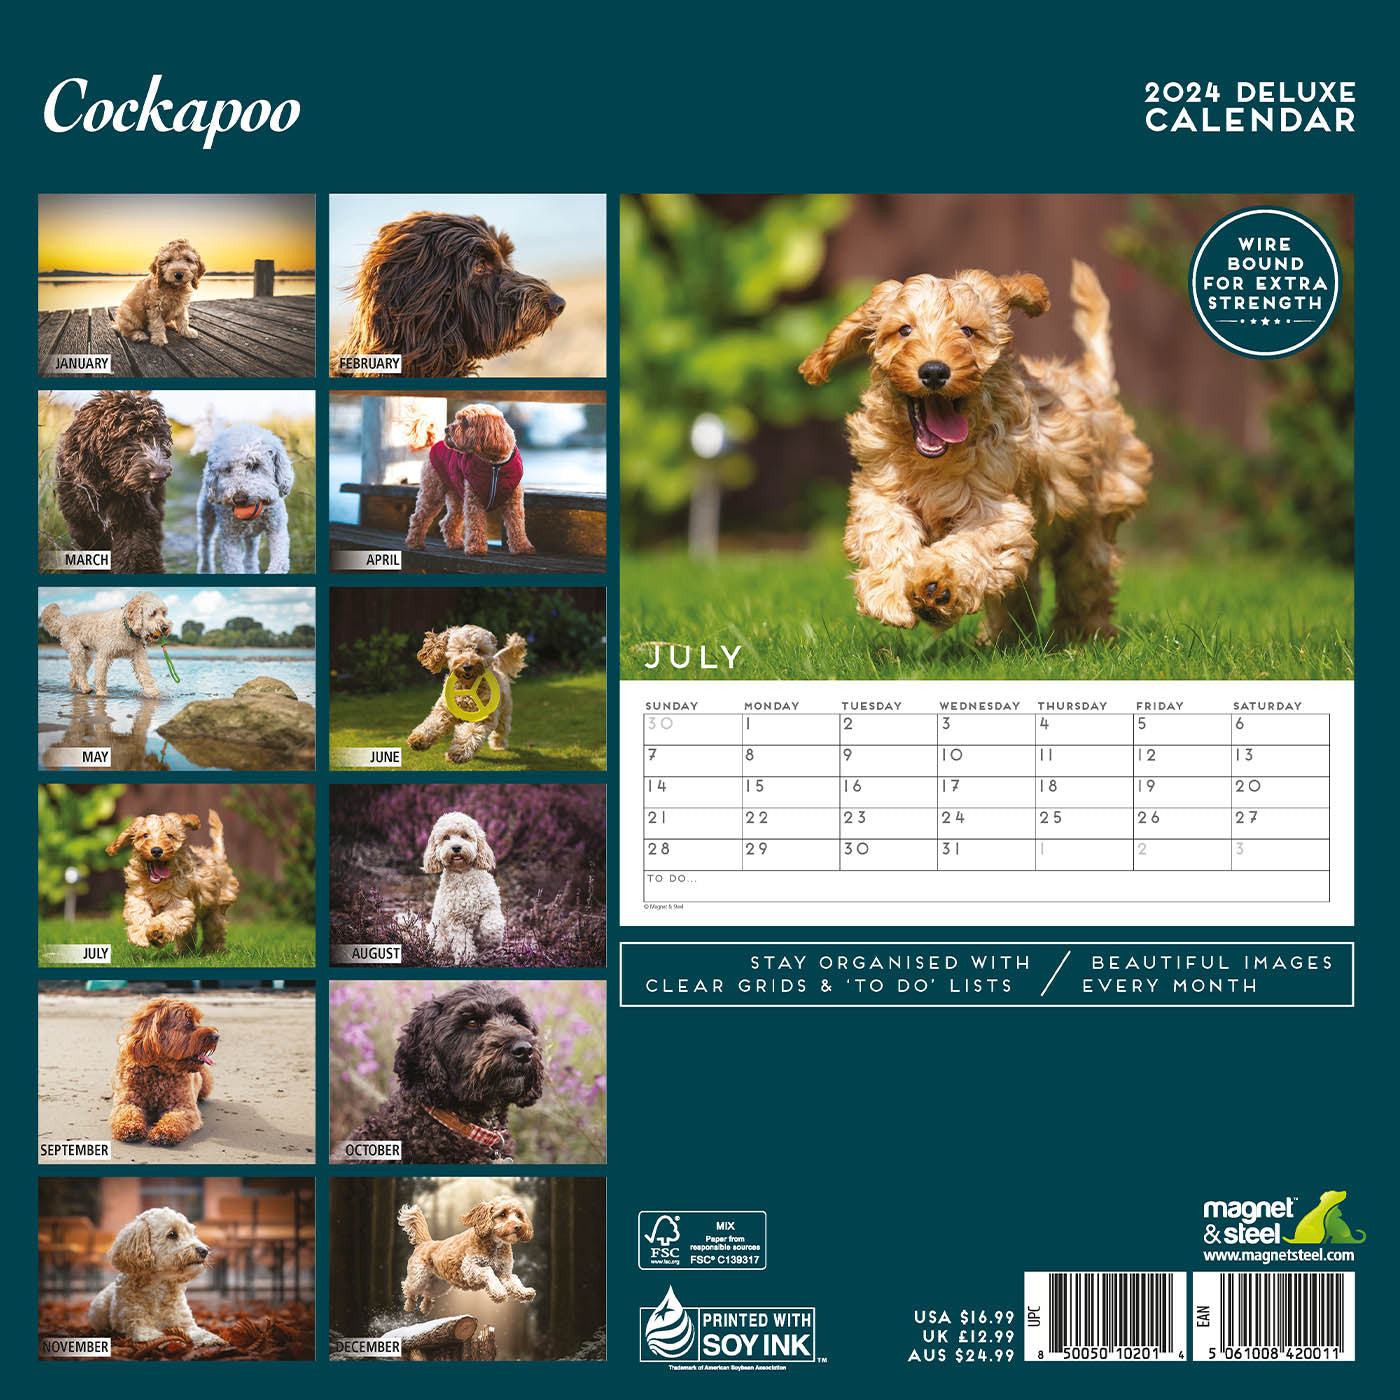 Cockapoo Deluxe Calendar 2024